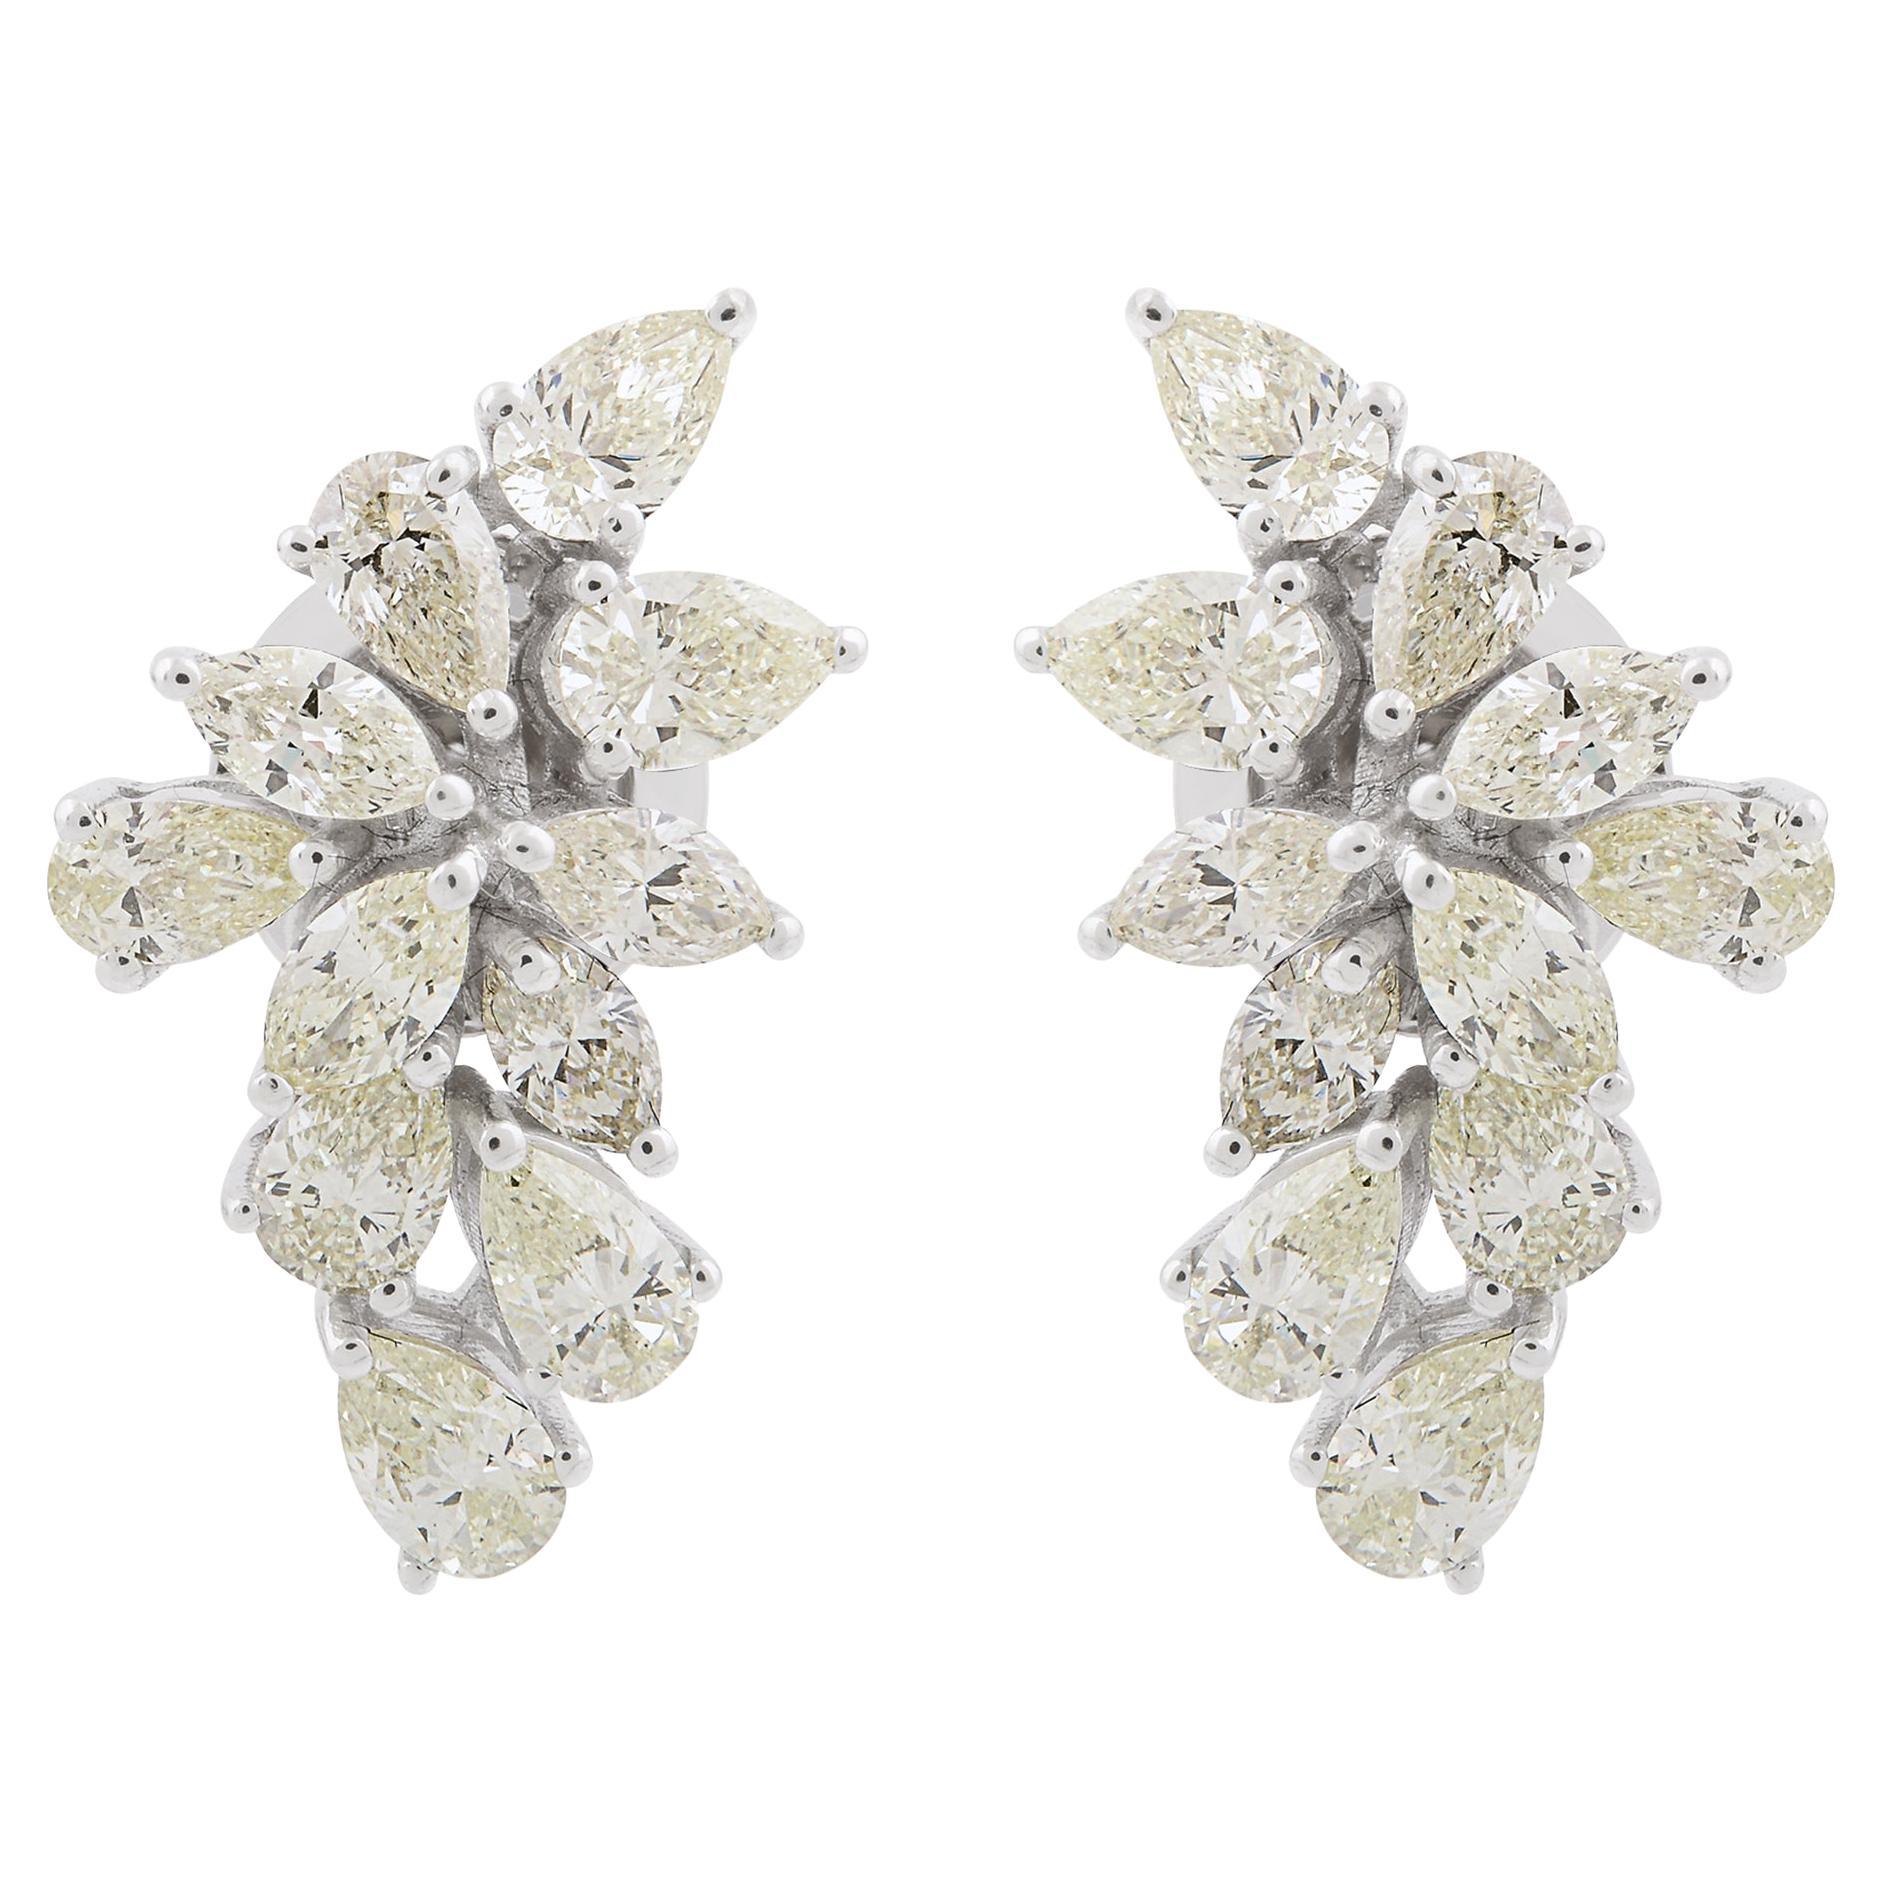 1.86 Carat Pear Marquise Diamond Earrings 18 Karat White Gold Handmade Jewelry For Sale